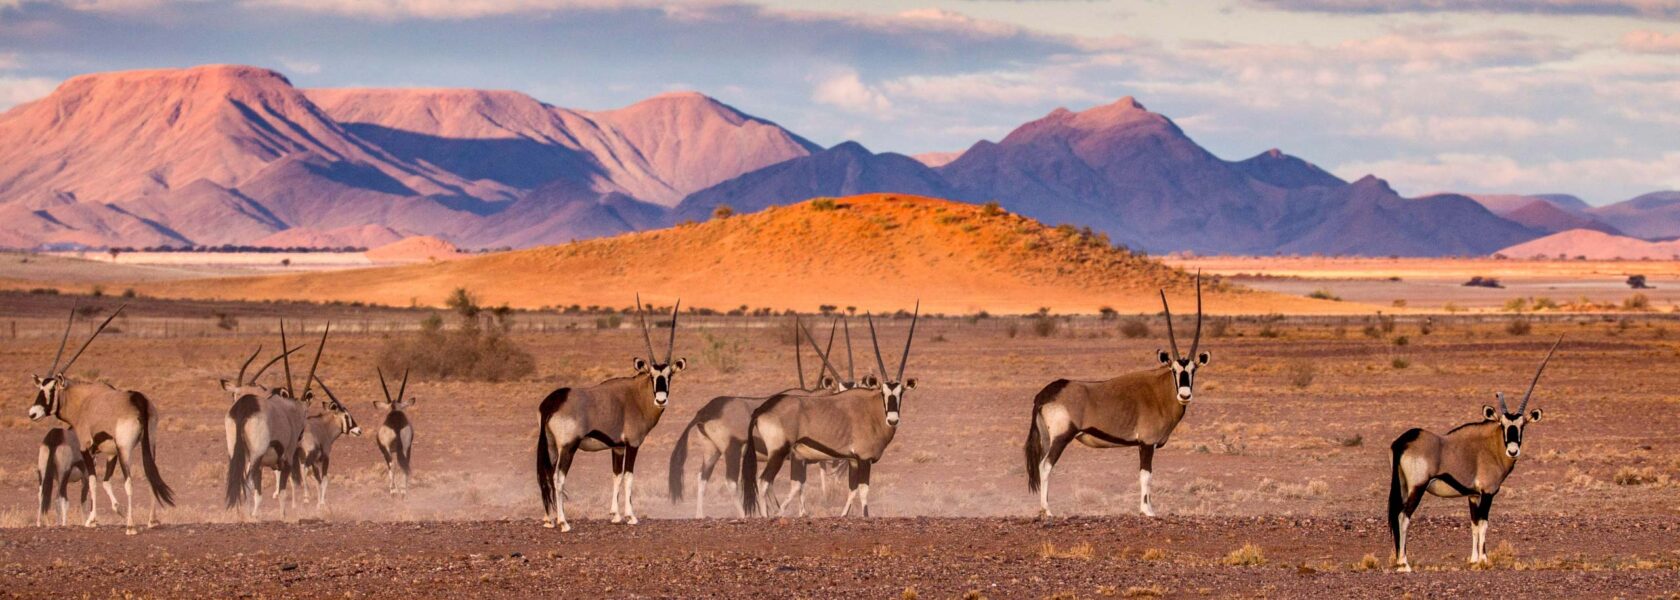 Beautiful herd of Oryx in the Namib Desert, Namibia.